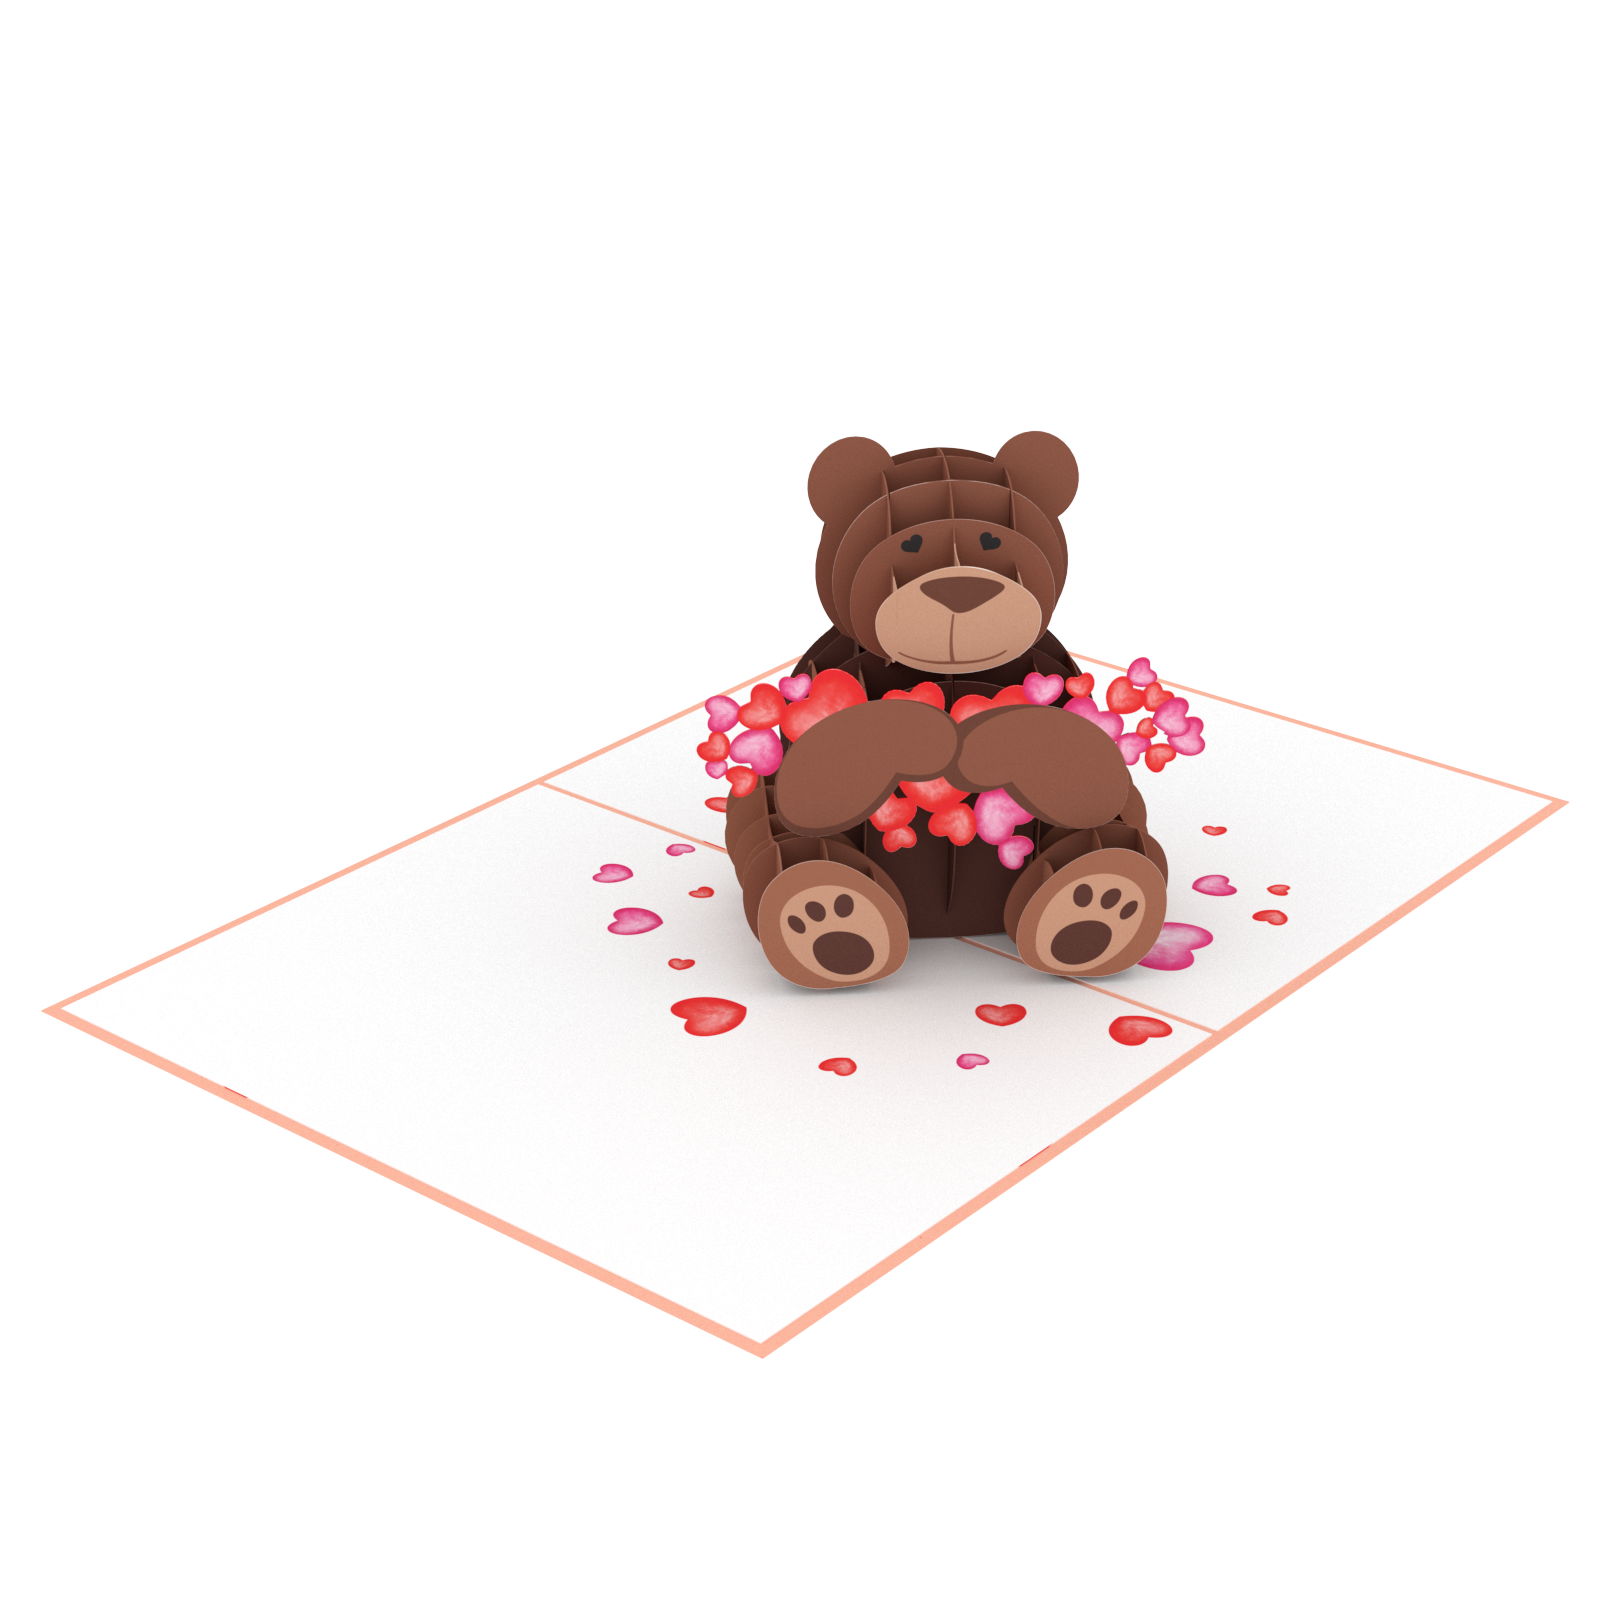 3D Pop Up Teddy Bear Card - AnonymousPotato